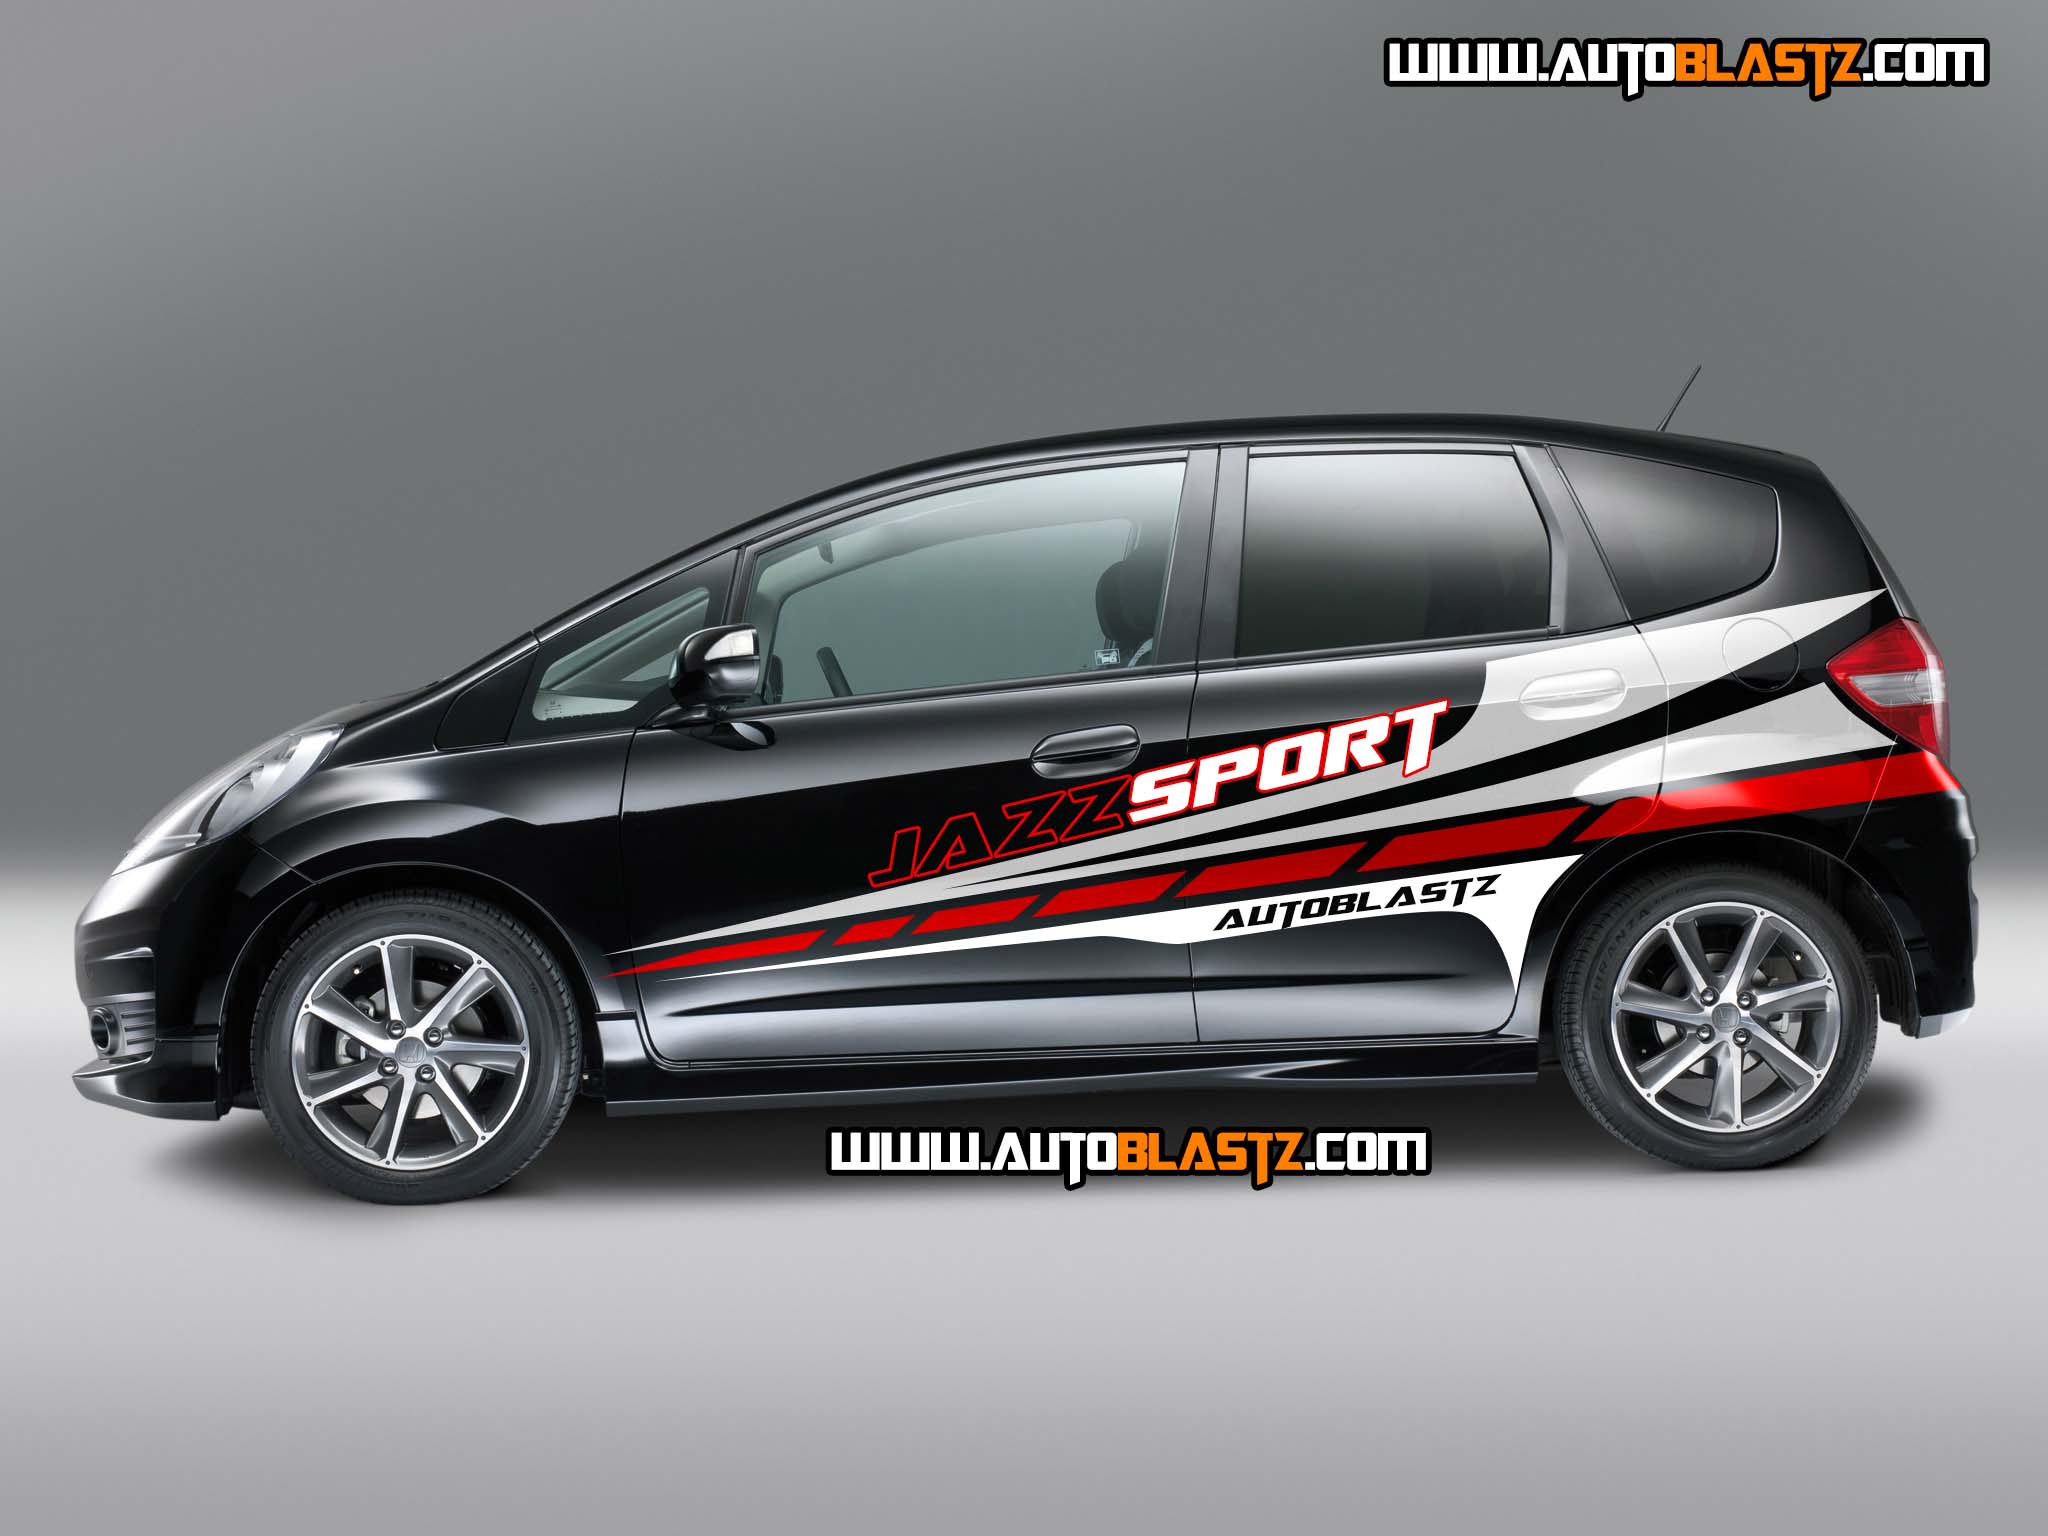 Car Series Modif Striping Honda Jazz Black Sport AUTOBLASTZ